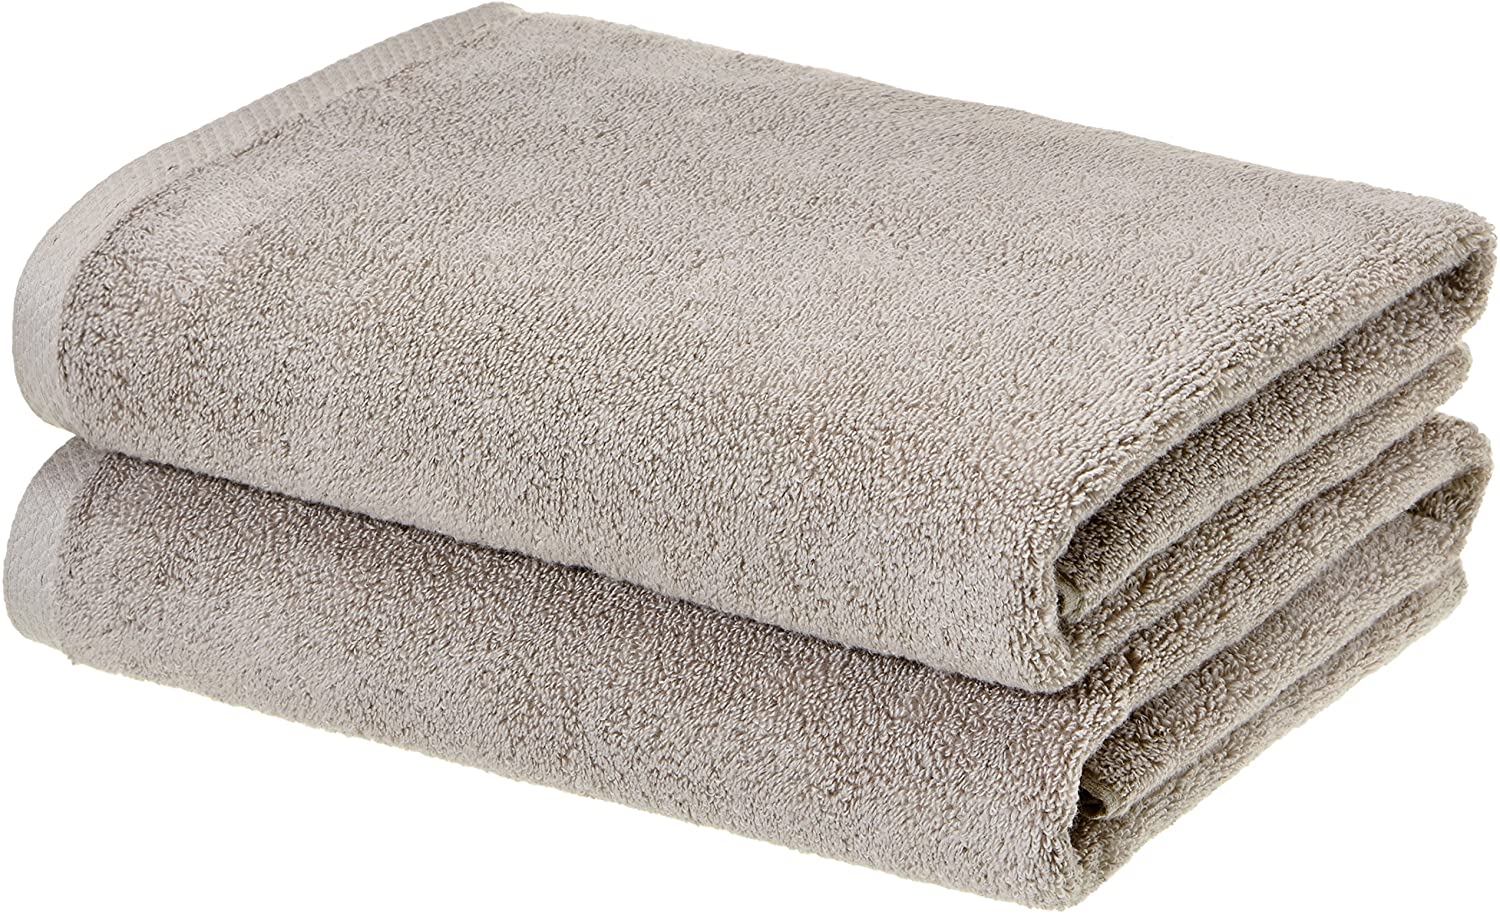 Amazon Basics Lightweight Cotton Bath Towels, 2-Piece